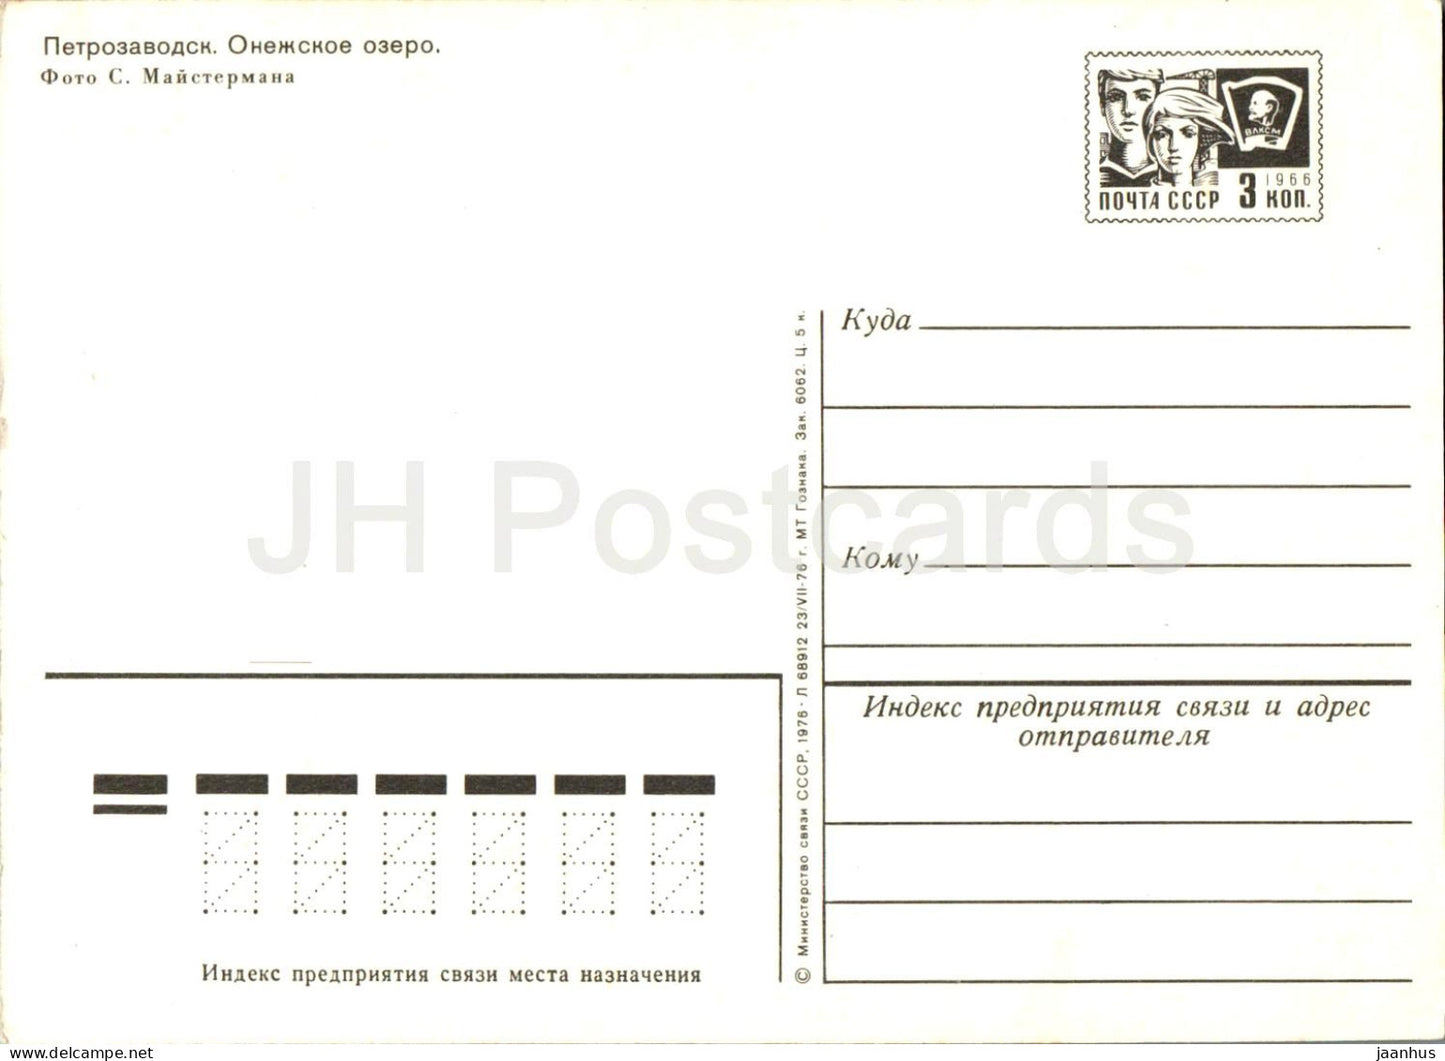 Petrozavodsk - lake Onega - ship - postal stationery - 1976 - Russia USSR - unused